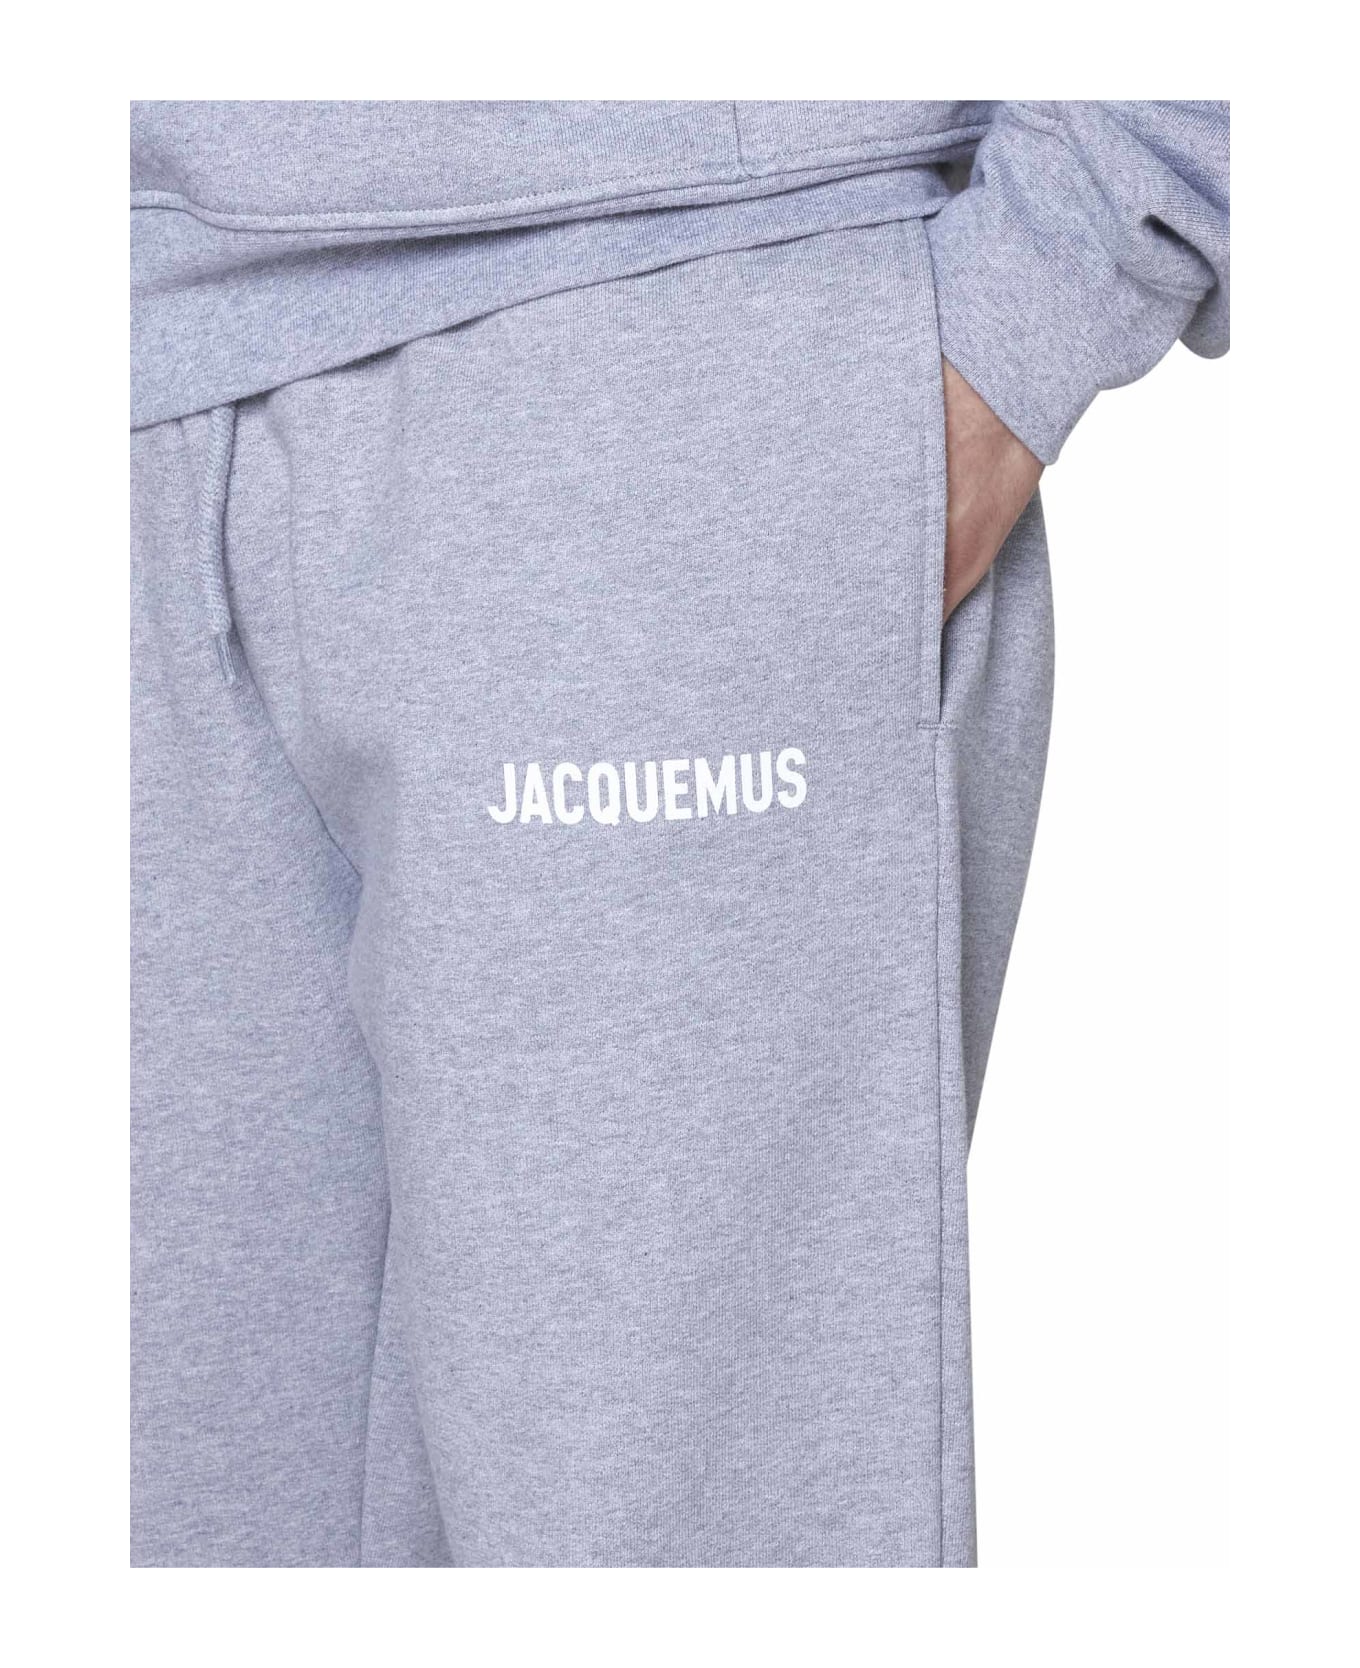 Jacquemus Pants - Grey